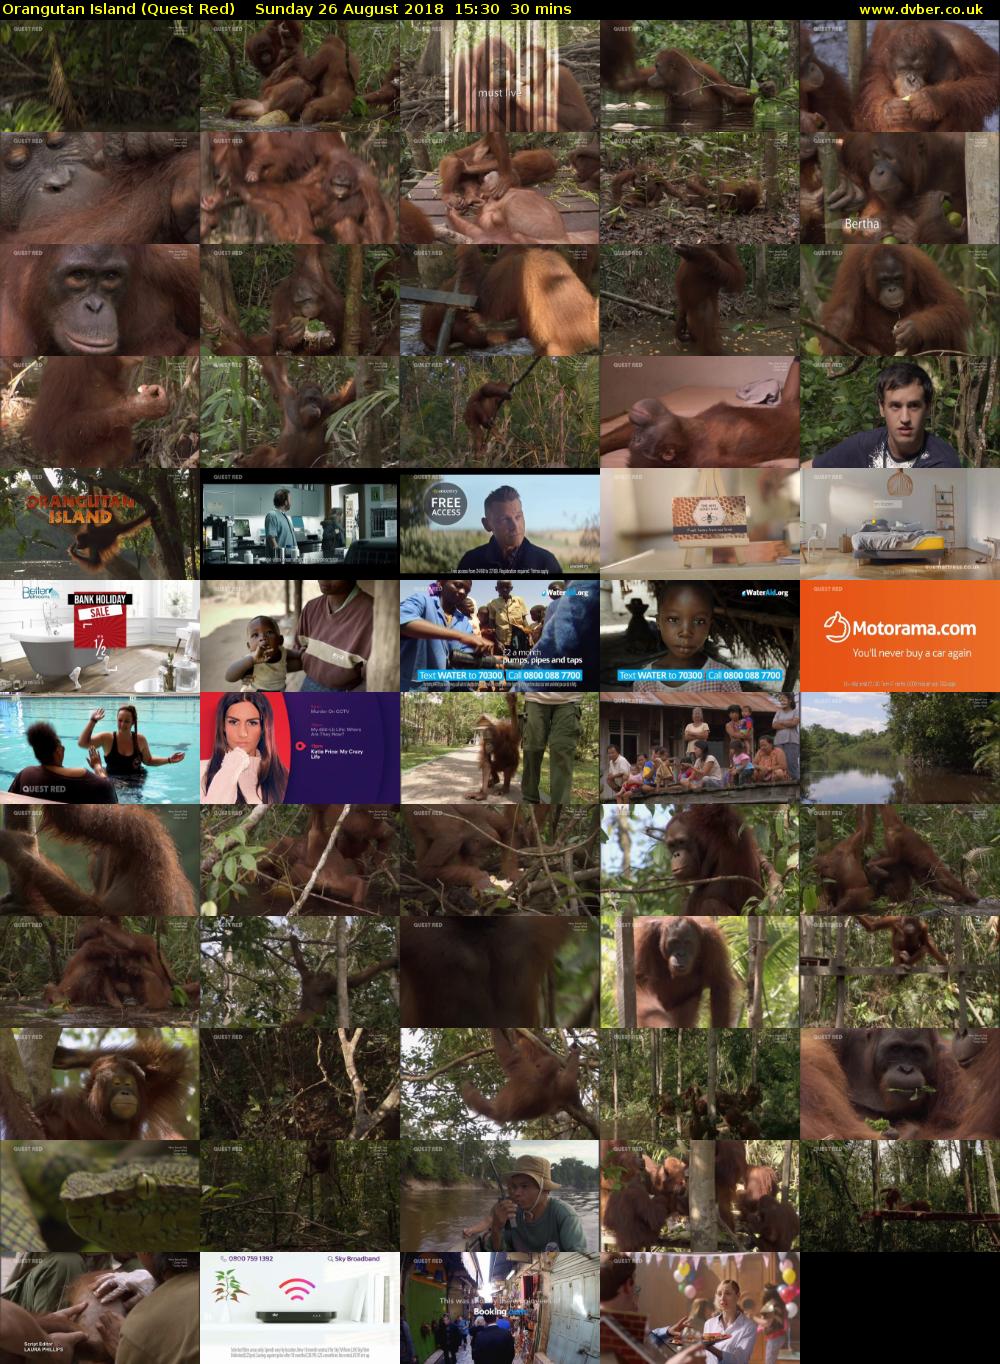 Orangutan Island (Quest Red) Sunday 26 August 2018 15:30 - 16:00